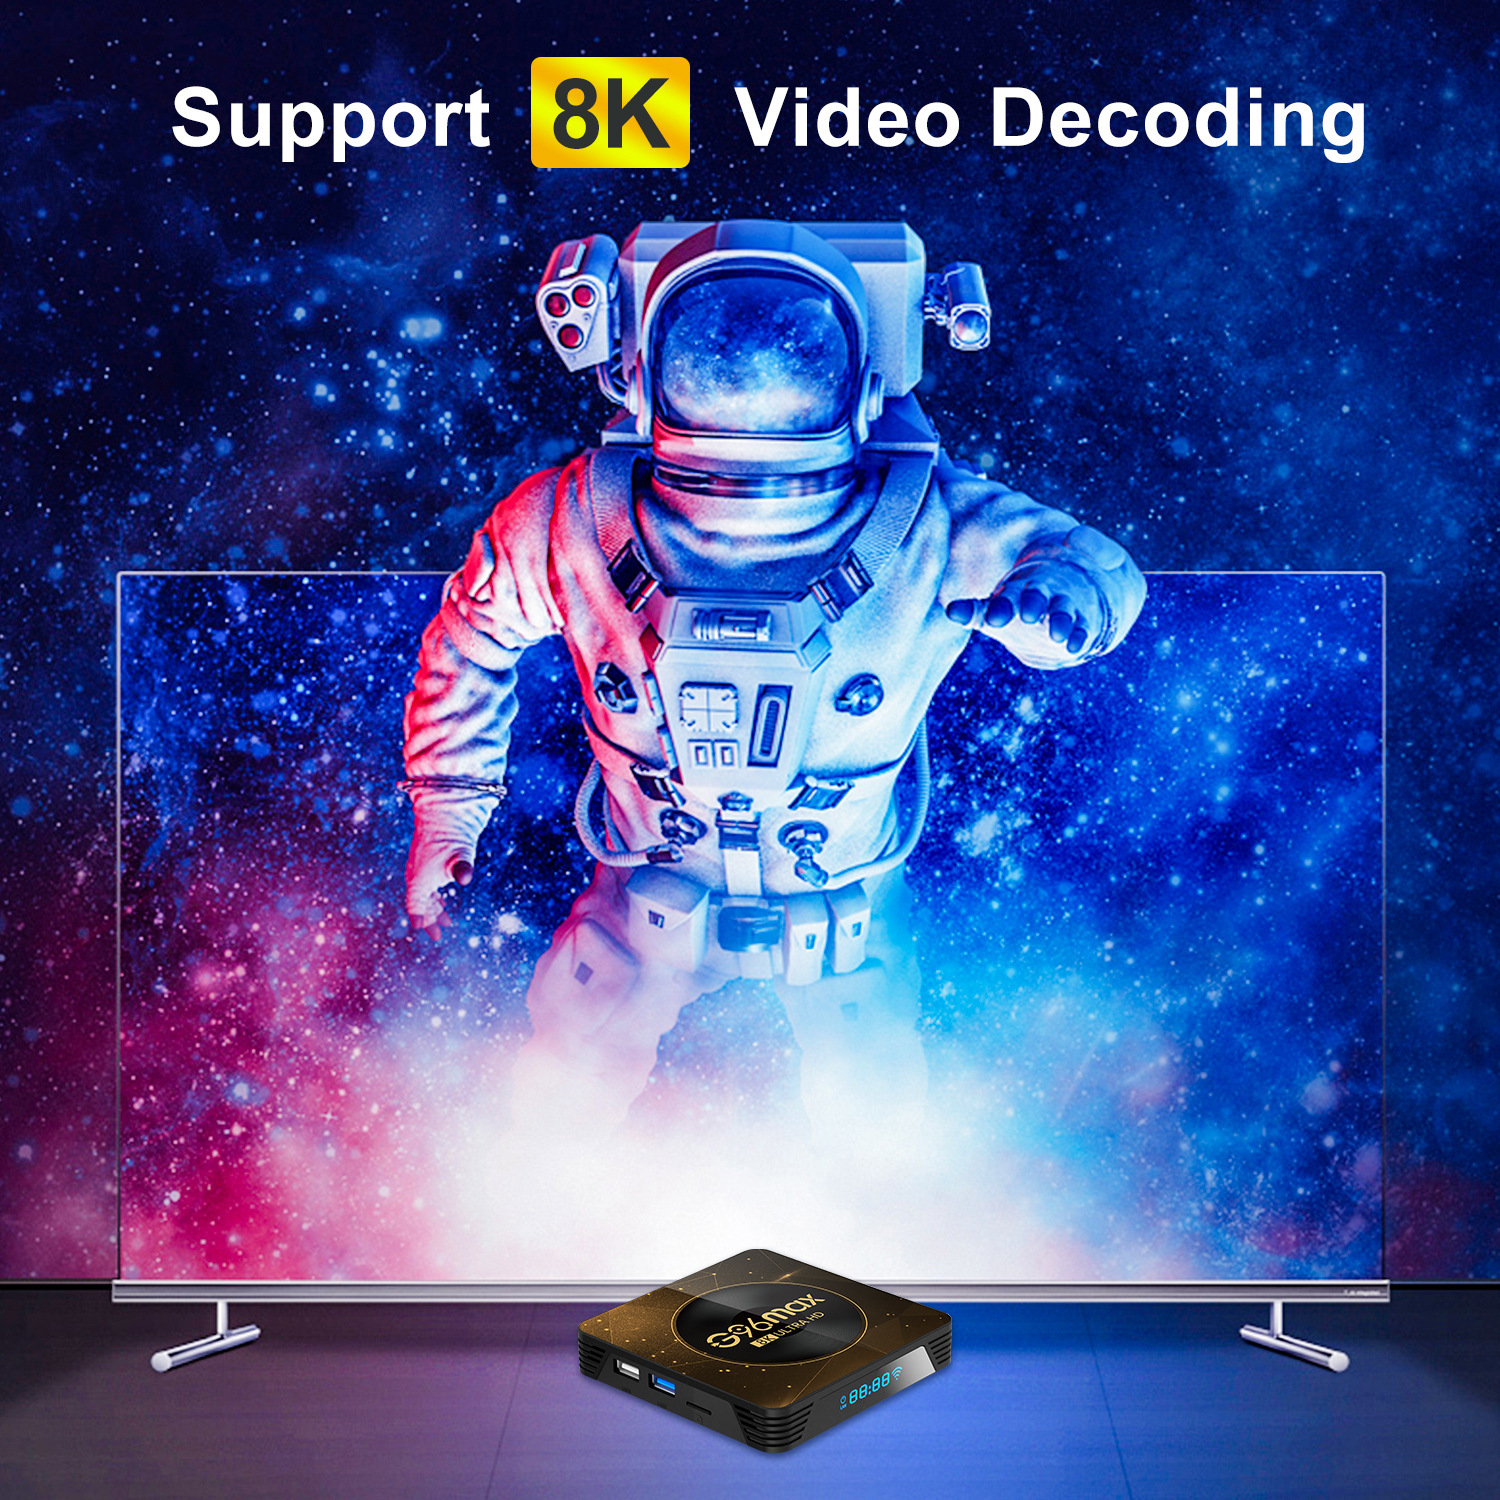 G96max RK3528 A13 TV Box 4+32G dual-band wifi bluetooth 8K set top box player